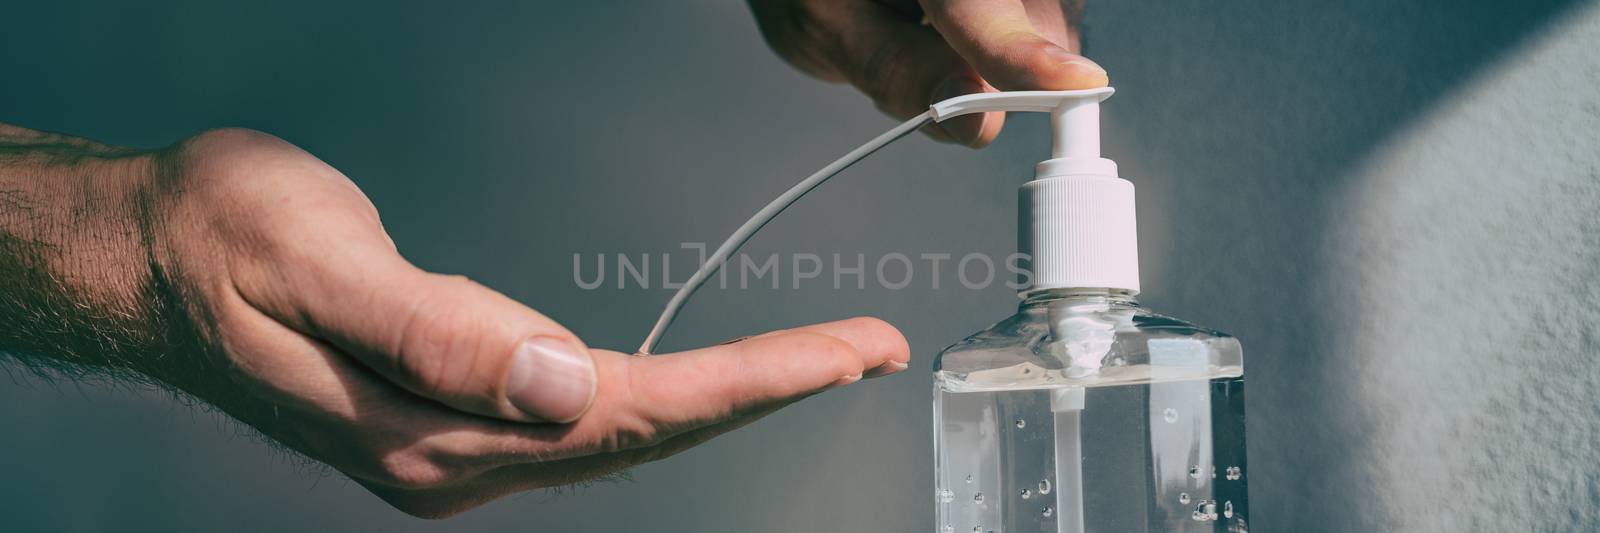 Hand sanitizer alcohol gel rub cleaning hands for hygiene prevention of coronavirus virus pandemic banner panoramic header by Maridav